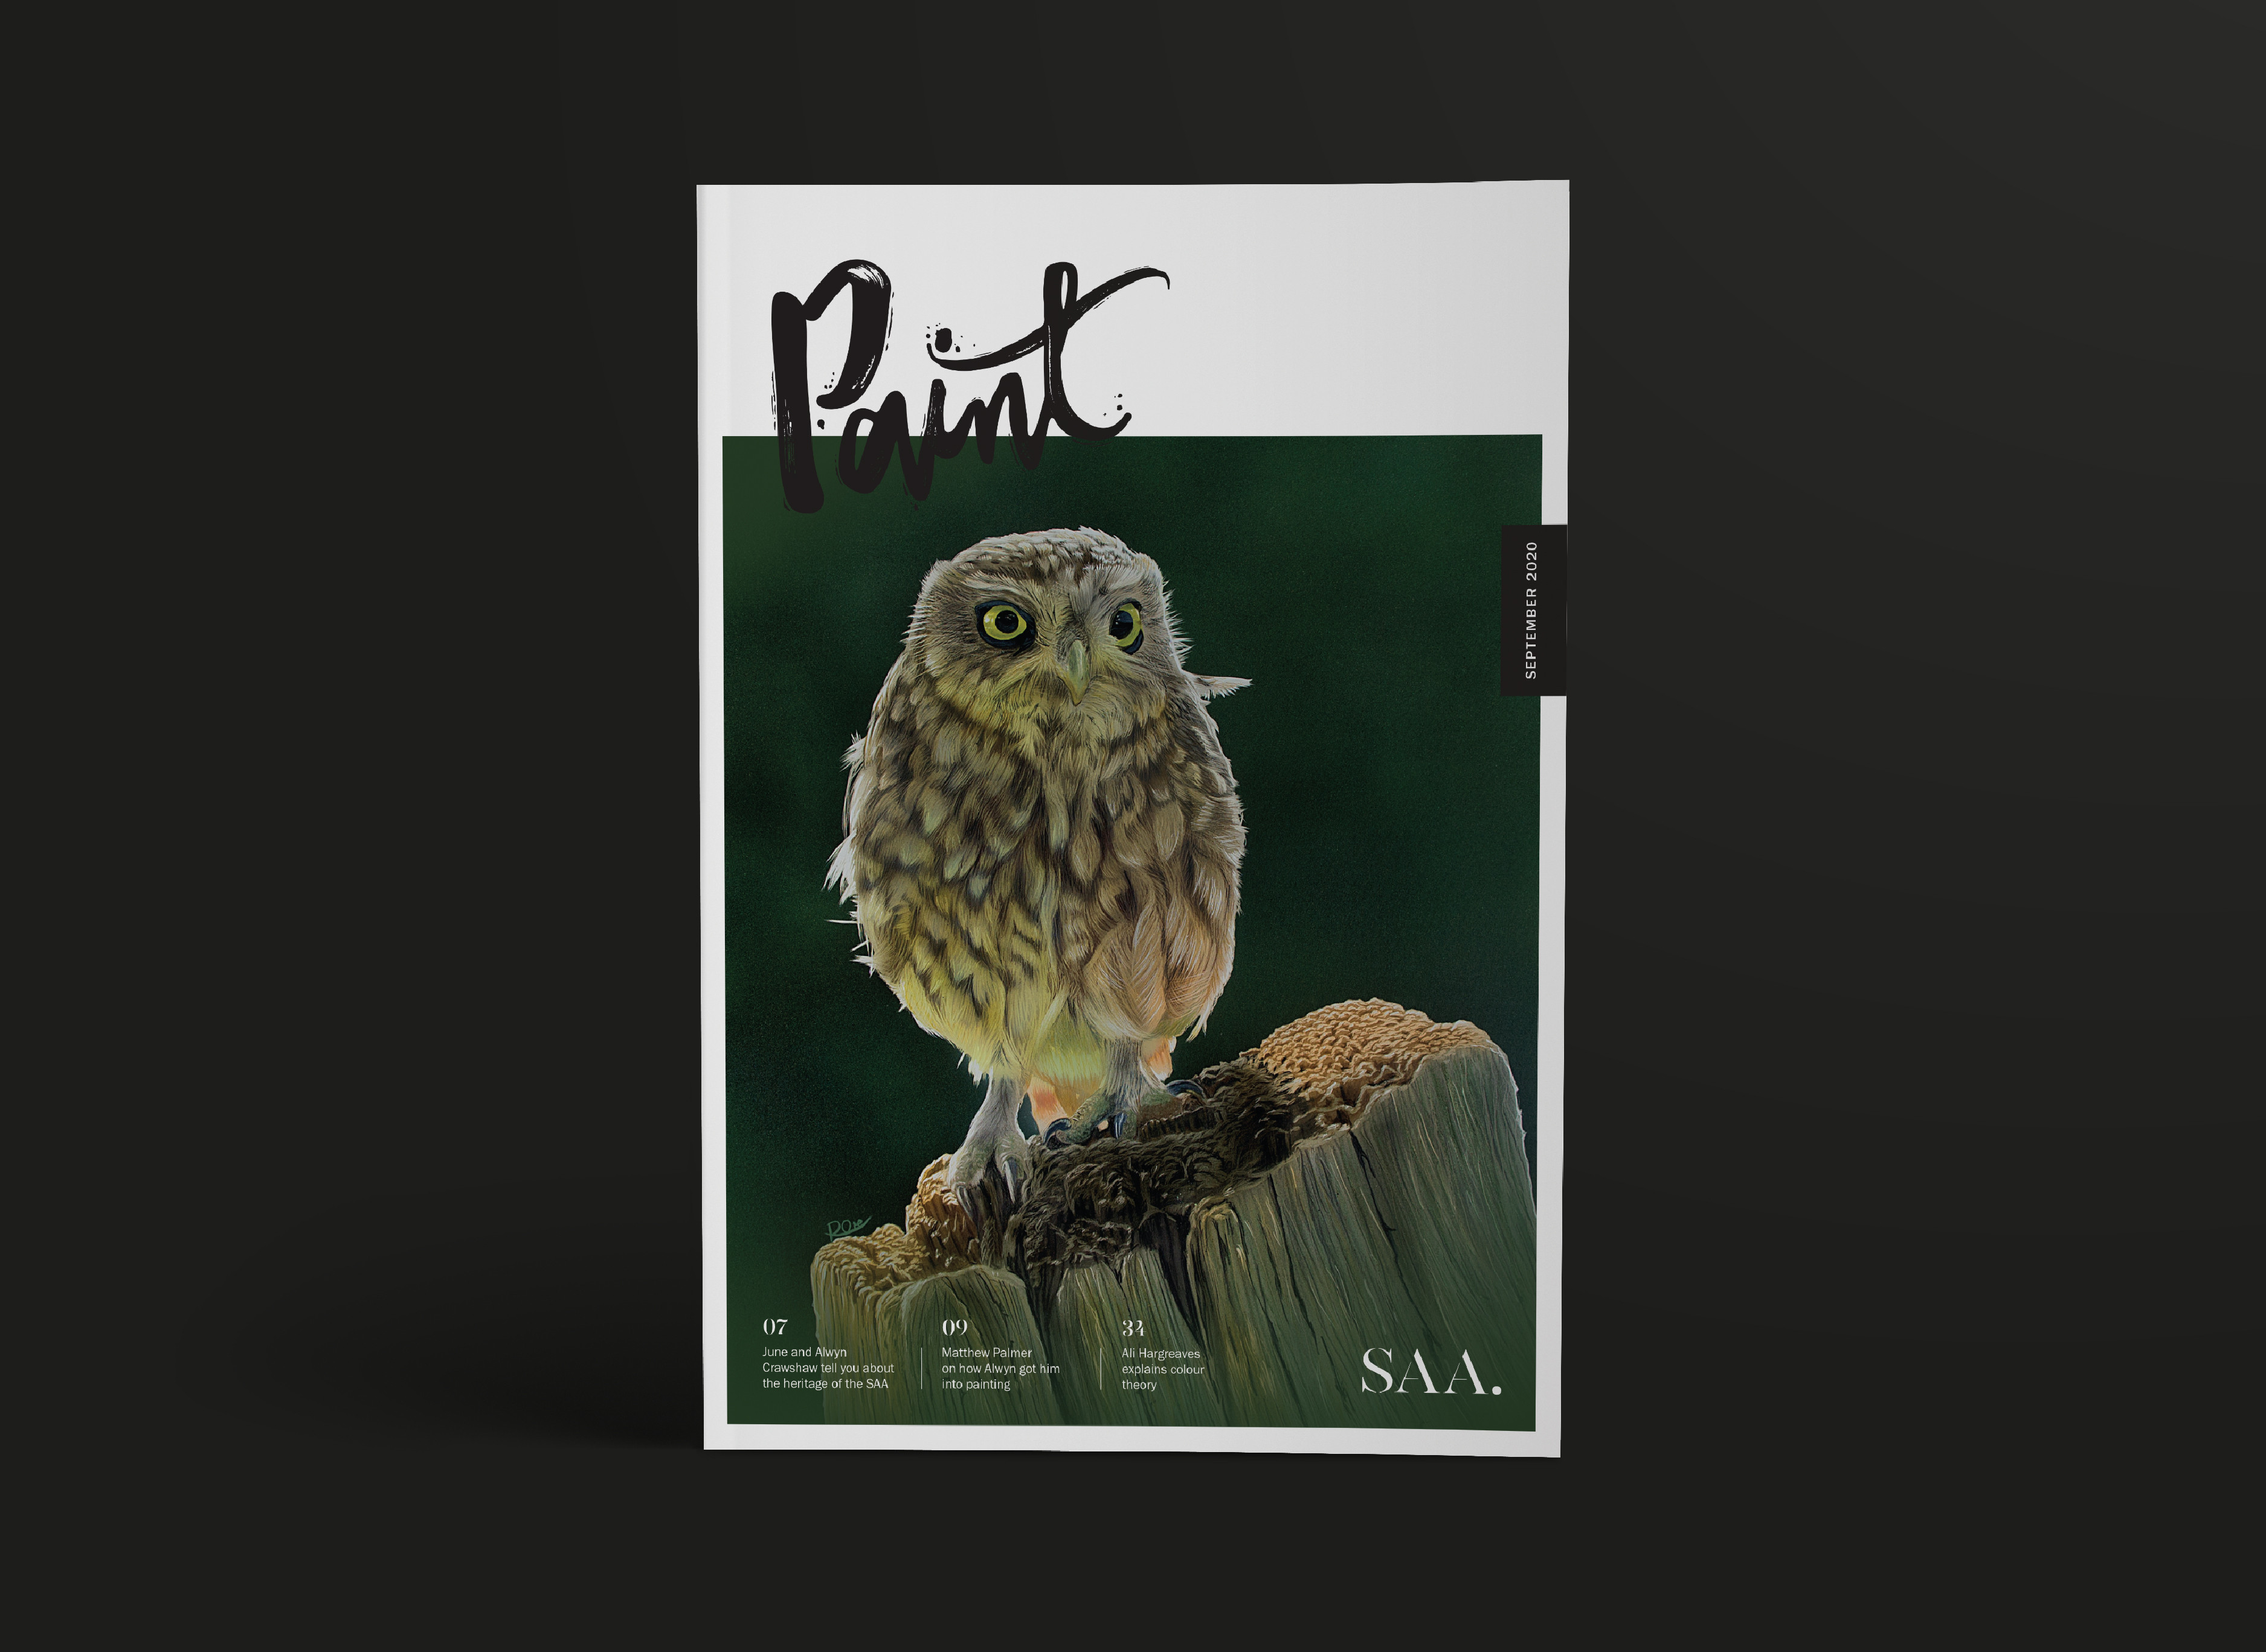 Paint Magazine Design by Root Studio